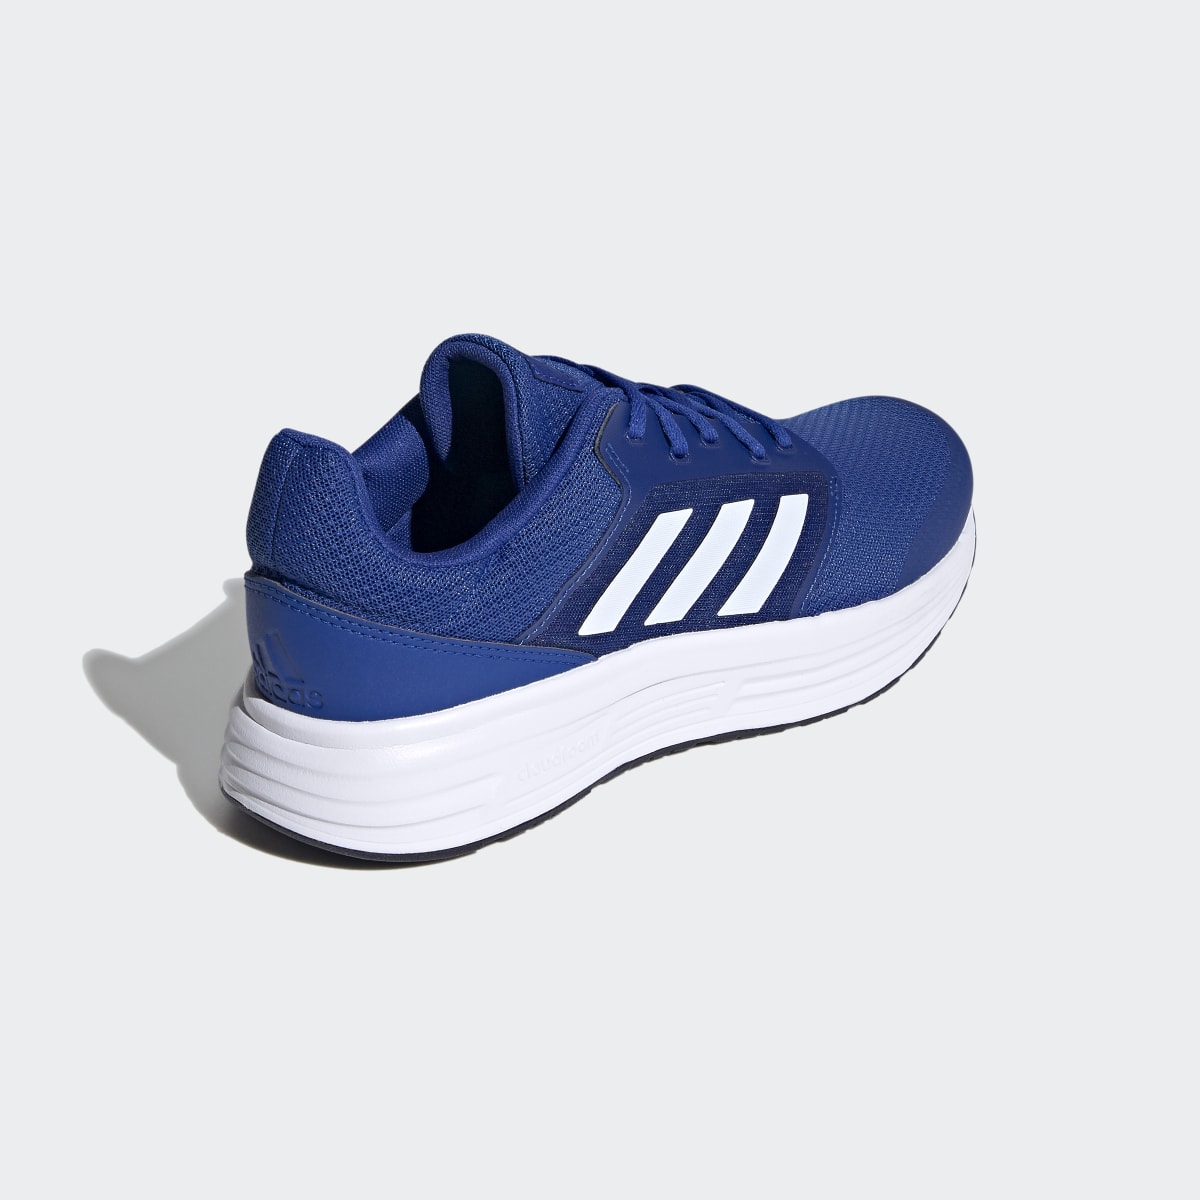 Adidas Galaxy 5 Shoes. 6